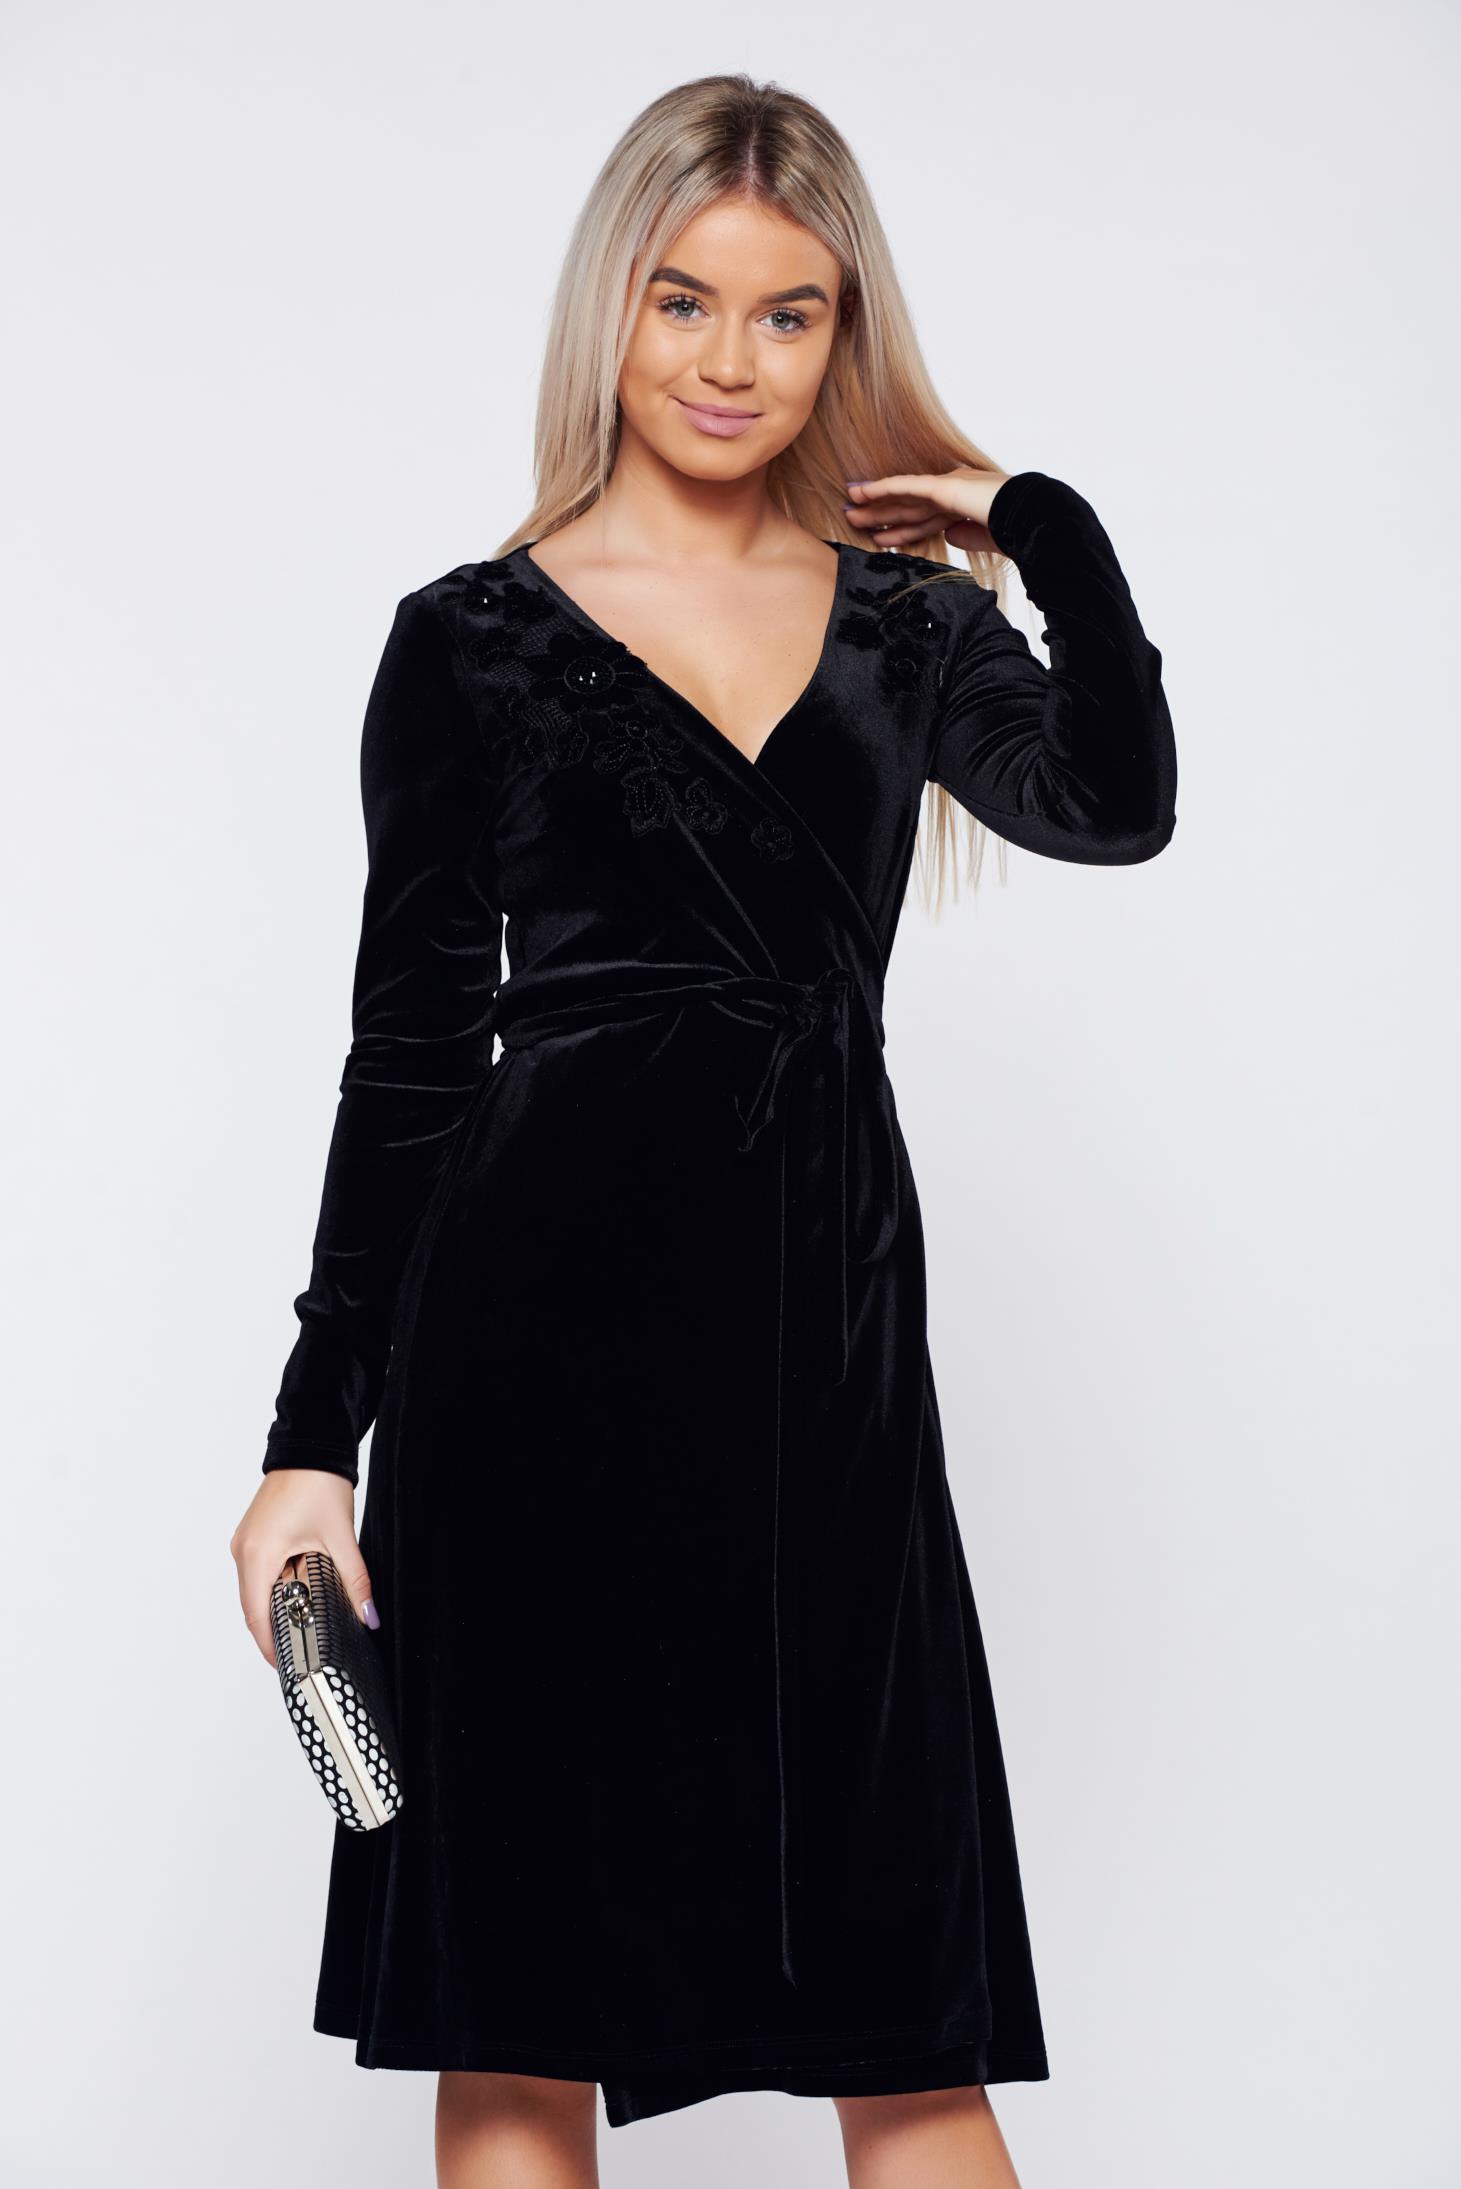 LaDonna black dress occasional wrap around velvet with floral details